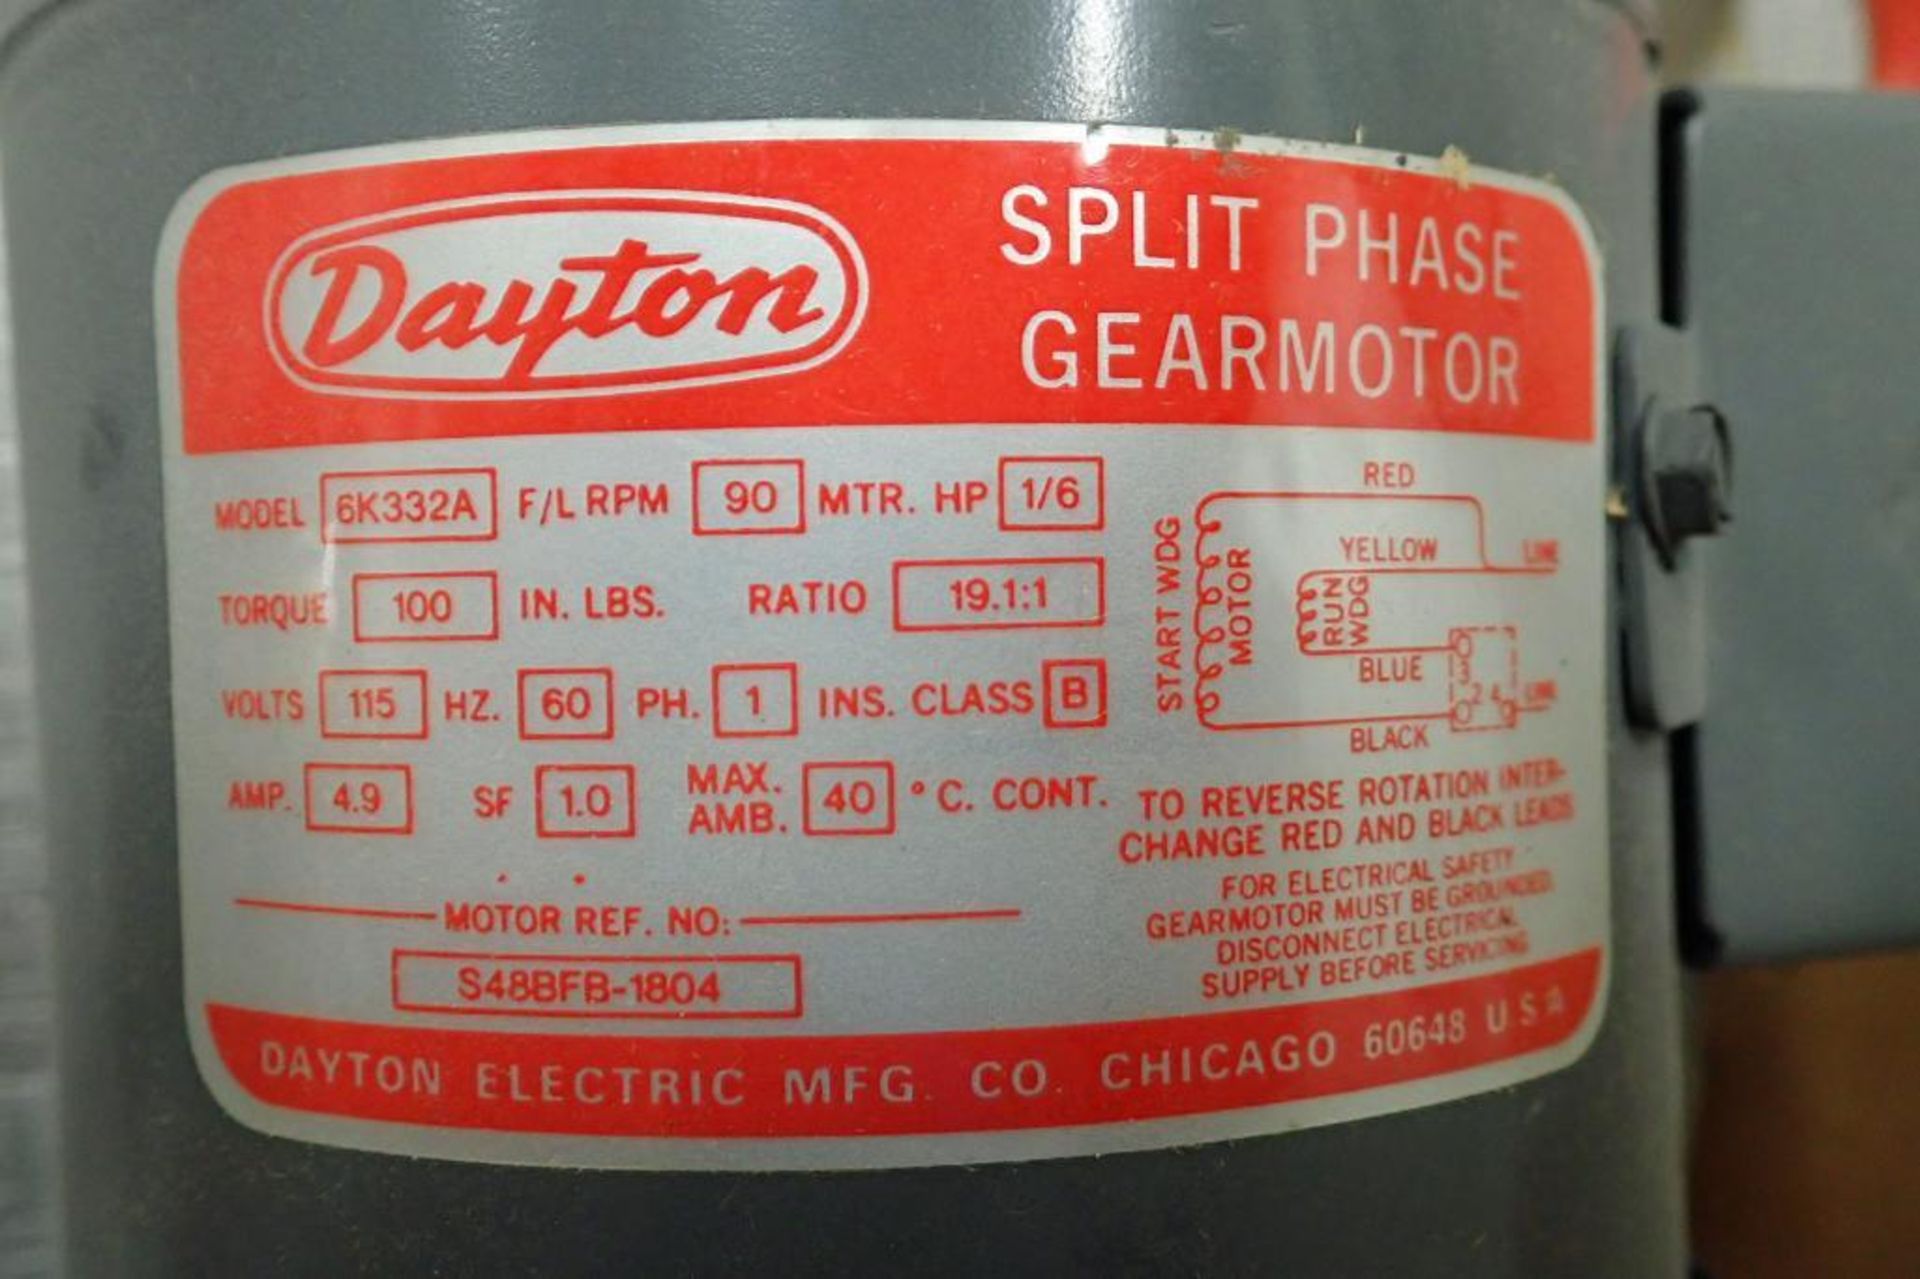 Unused Dayton split phase AC motor, 1/16 hp, 90 rpm, torque 100 in. lbs., ratio 19.1:1, 115 volt. ** - Image 3 of 5